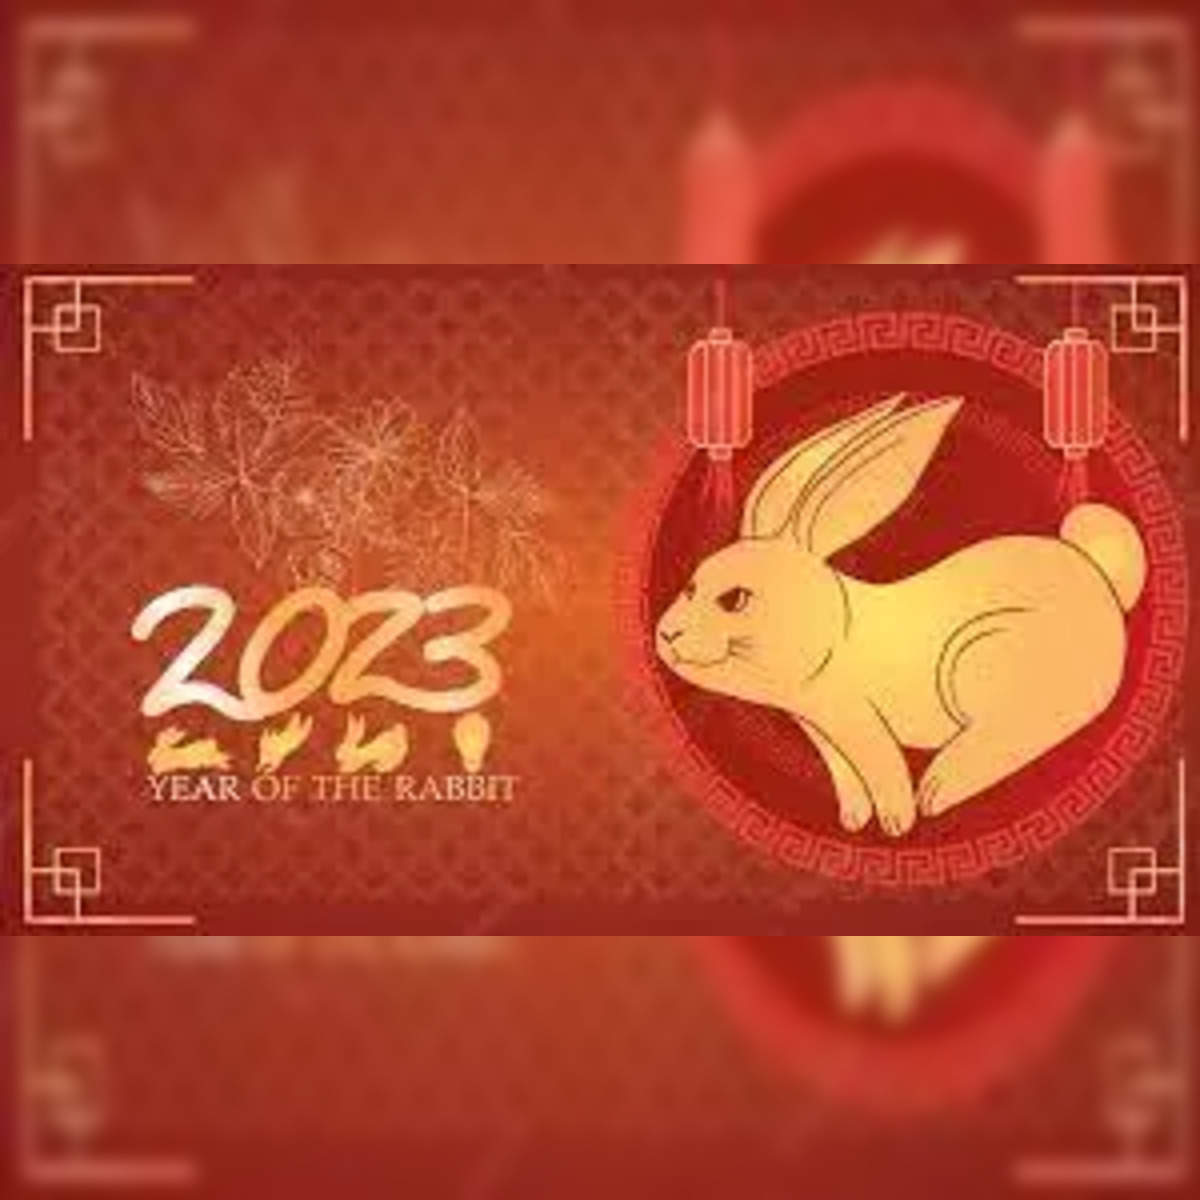 POST Event - Lunar New Year Celebration, Jan 15, 2023